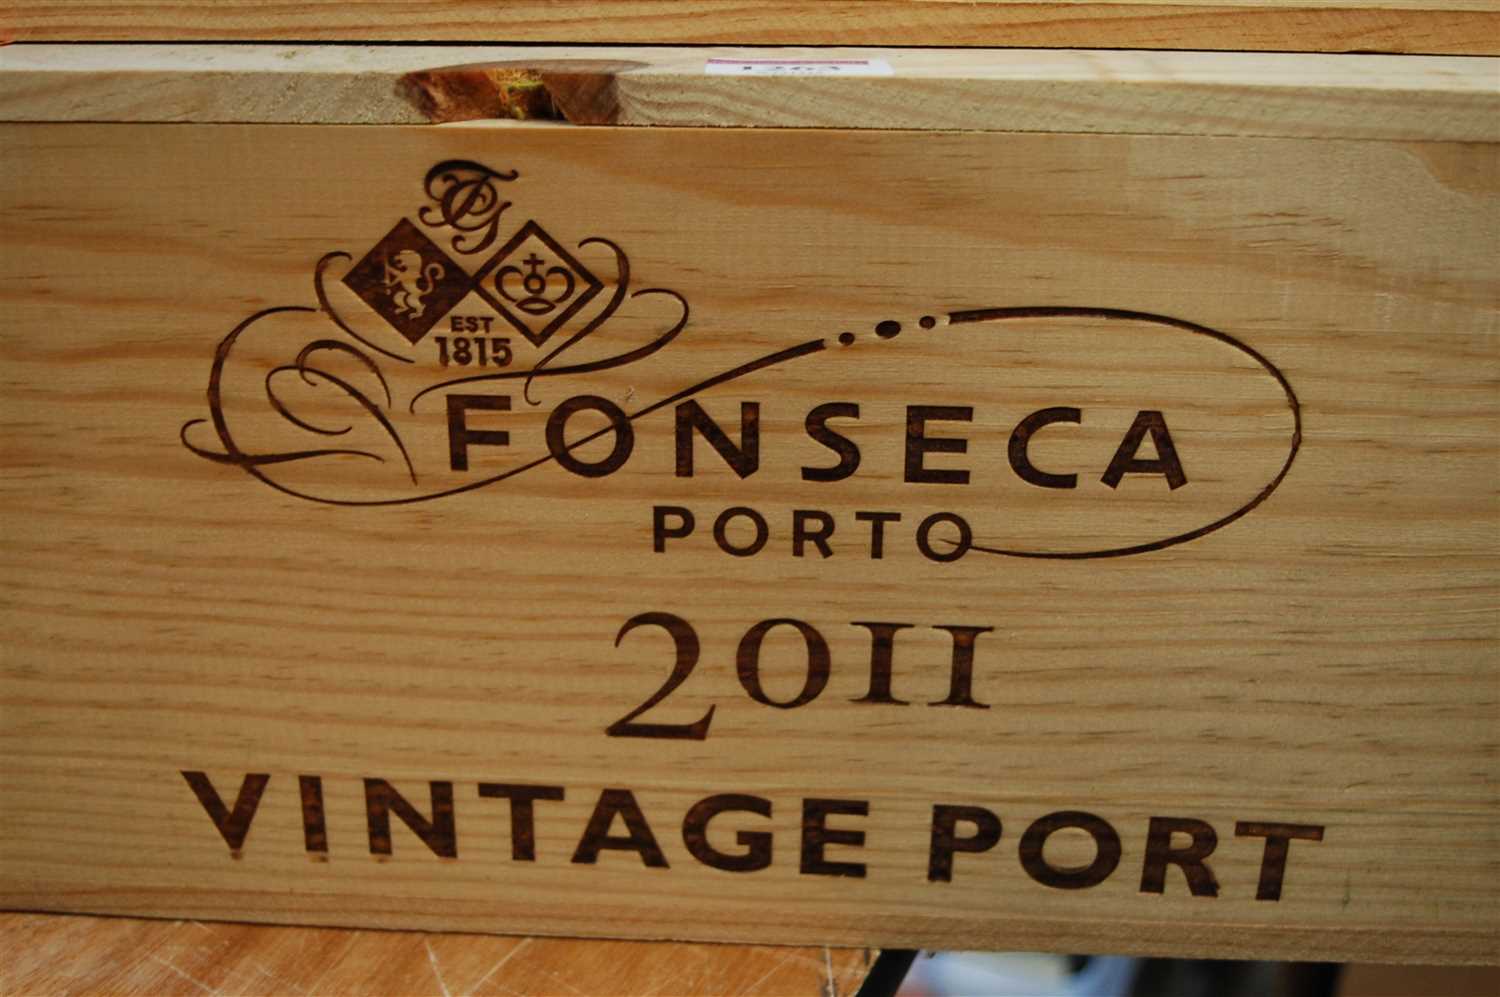 Lot 1262 - Fonseca, 2011 vintage port, six bottles (OWC)